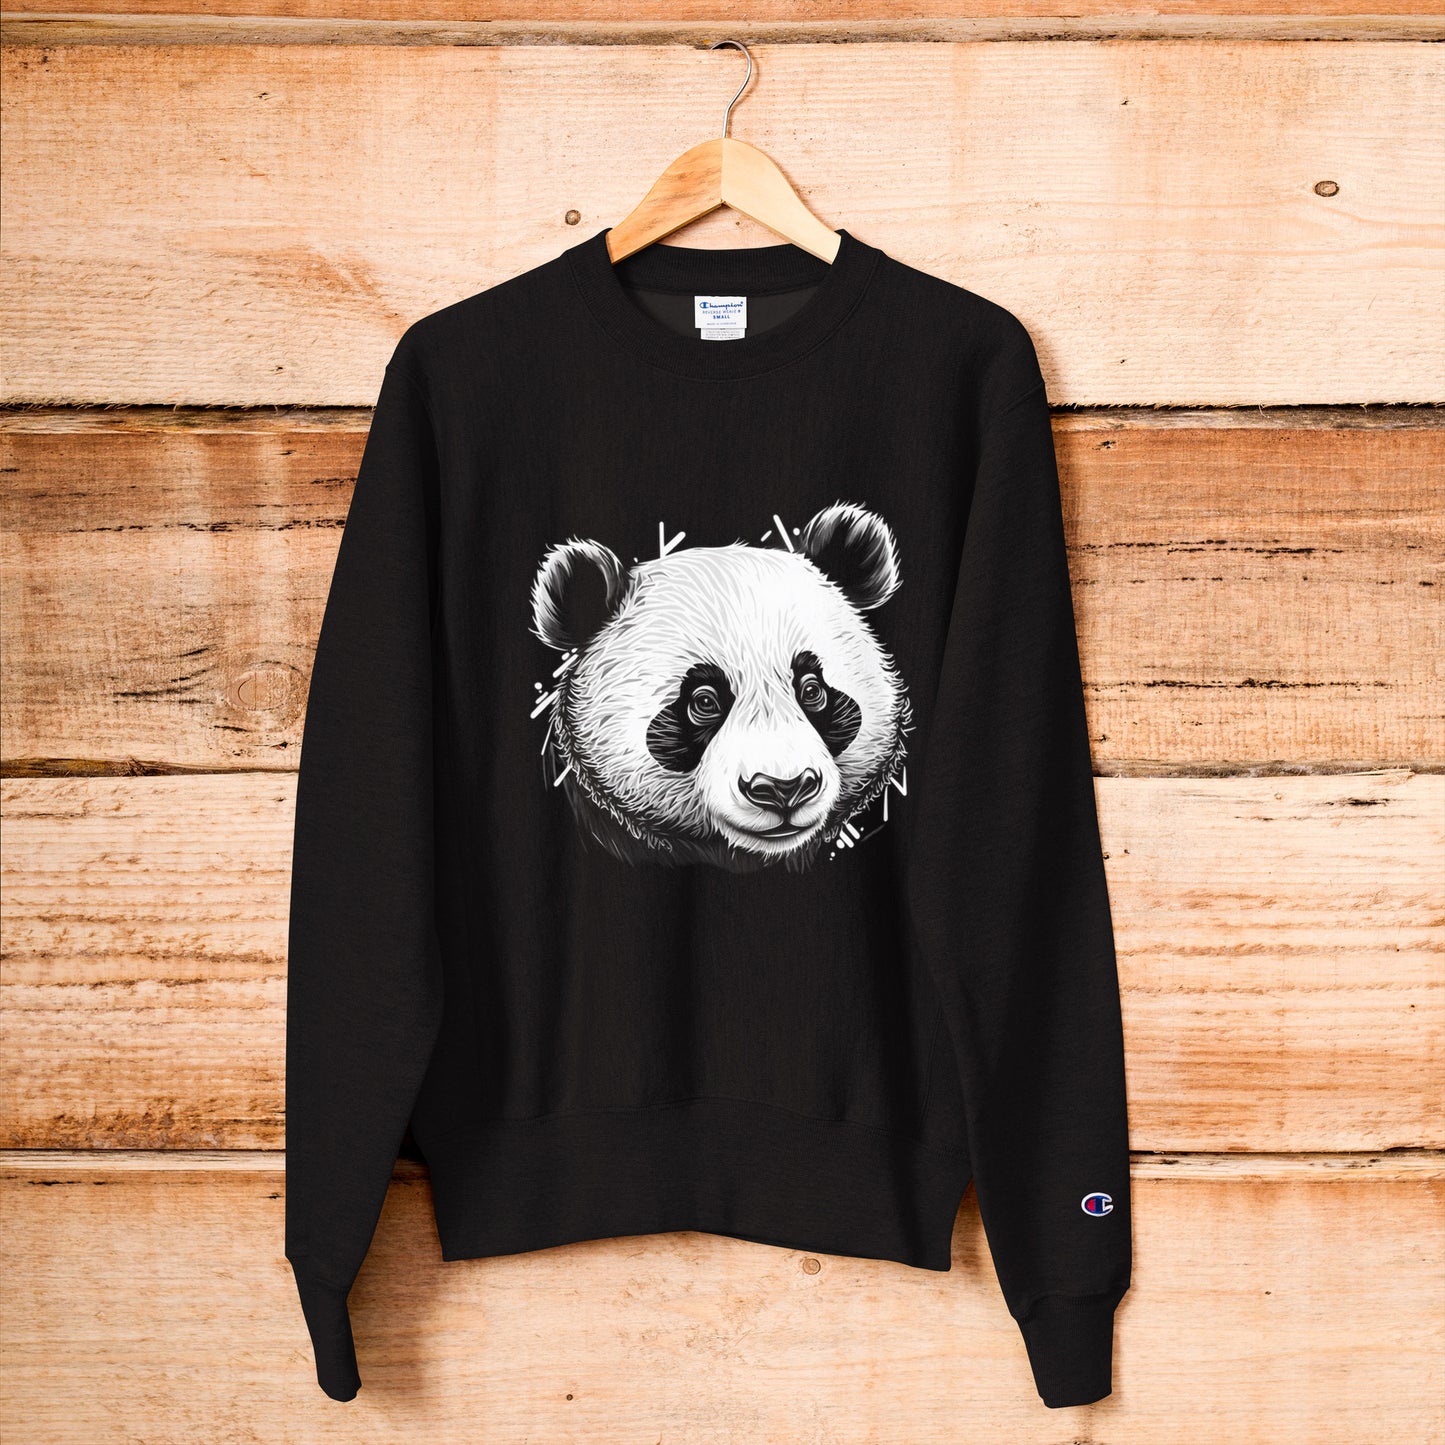 Champion Precious Panda Sweatshirt